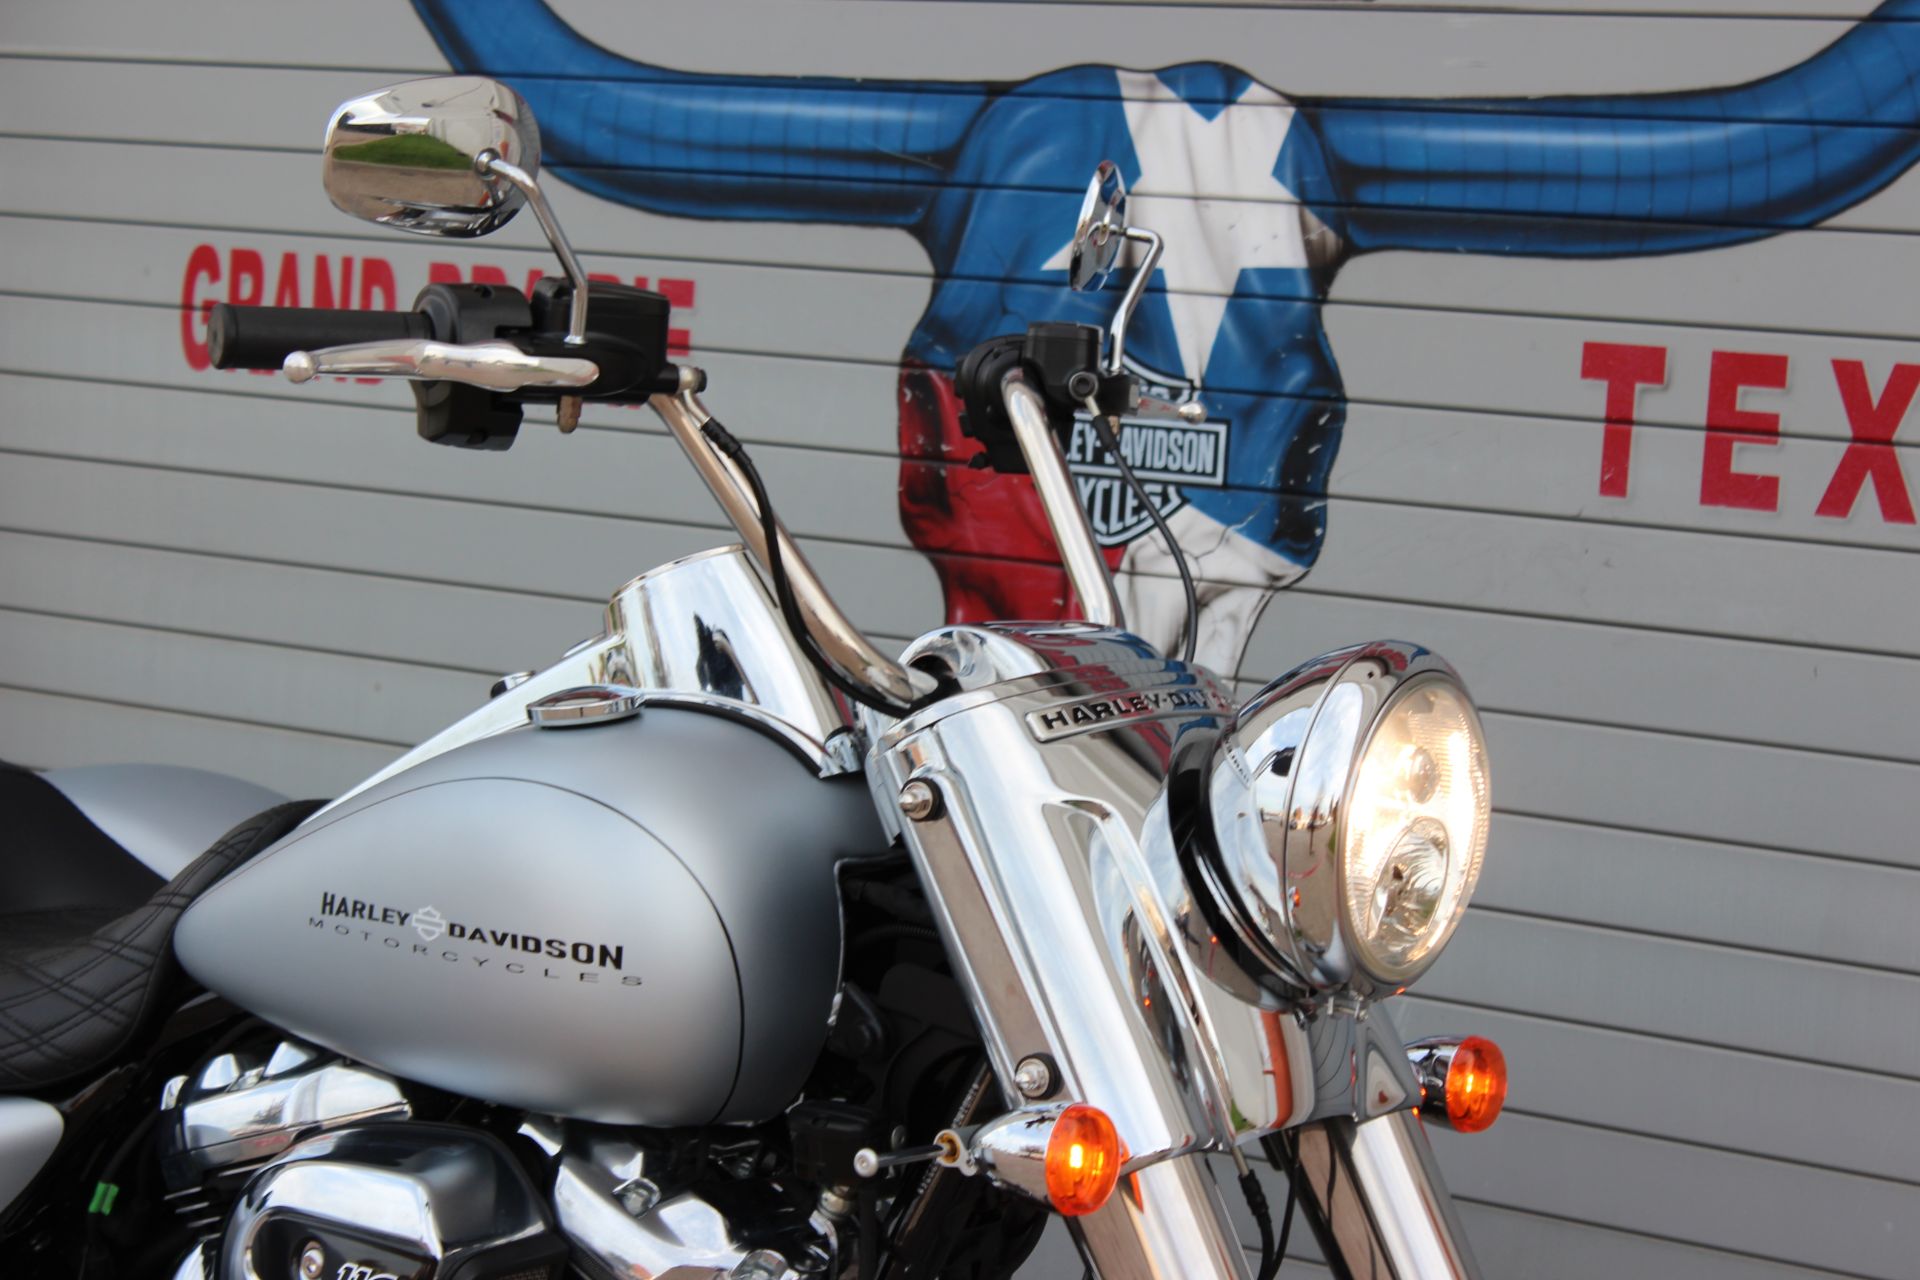 2020 Harley-Davidson Freewheeler® in Grand Prairie, Texas - Photo 2